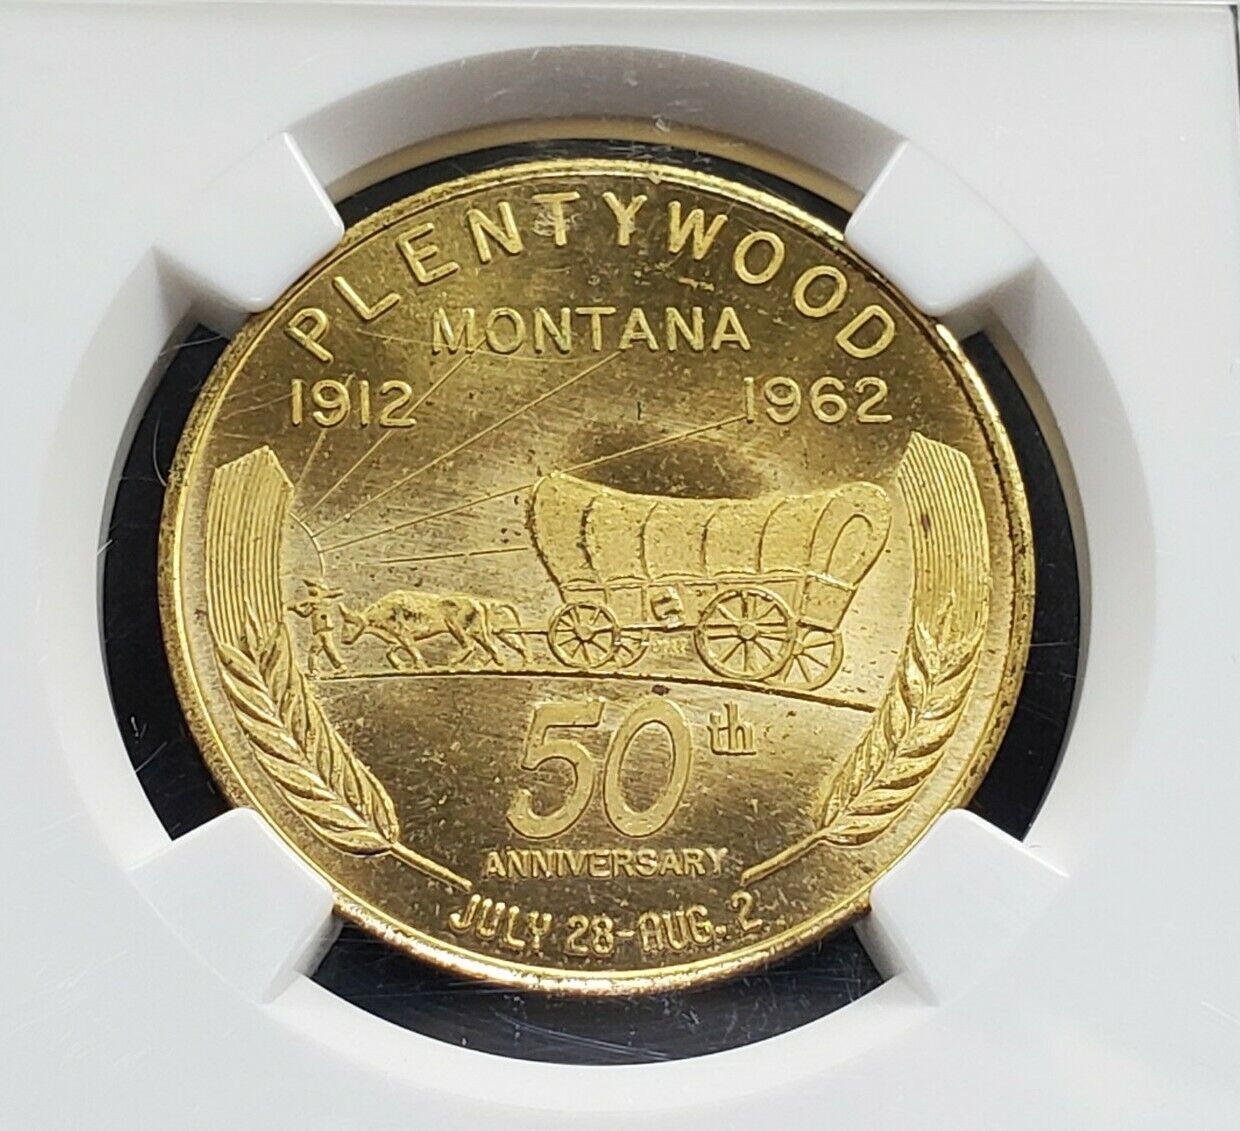 Plentywood Plenty Wood 50th Anniversary Montana Brass Token Medal NGC MS64 CH BU